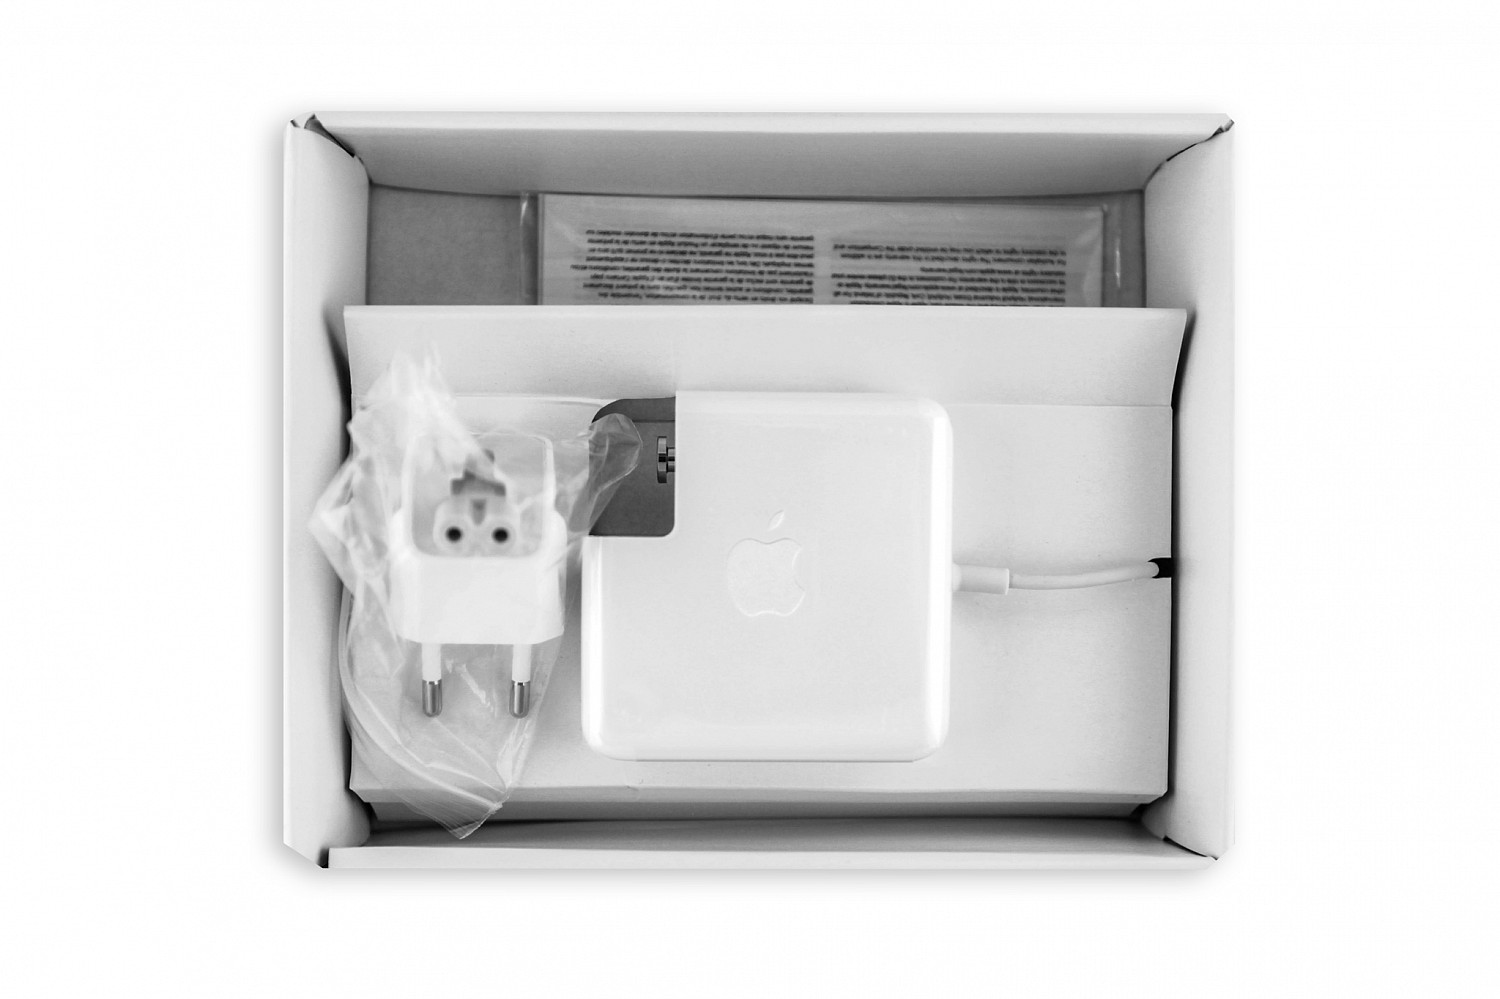 картинка Блок питания Apple 60W MagSafe 1 от магазина Компания+